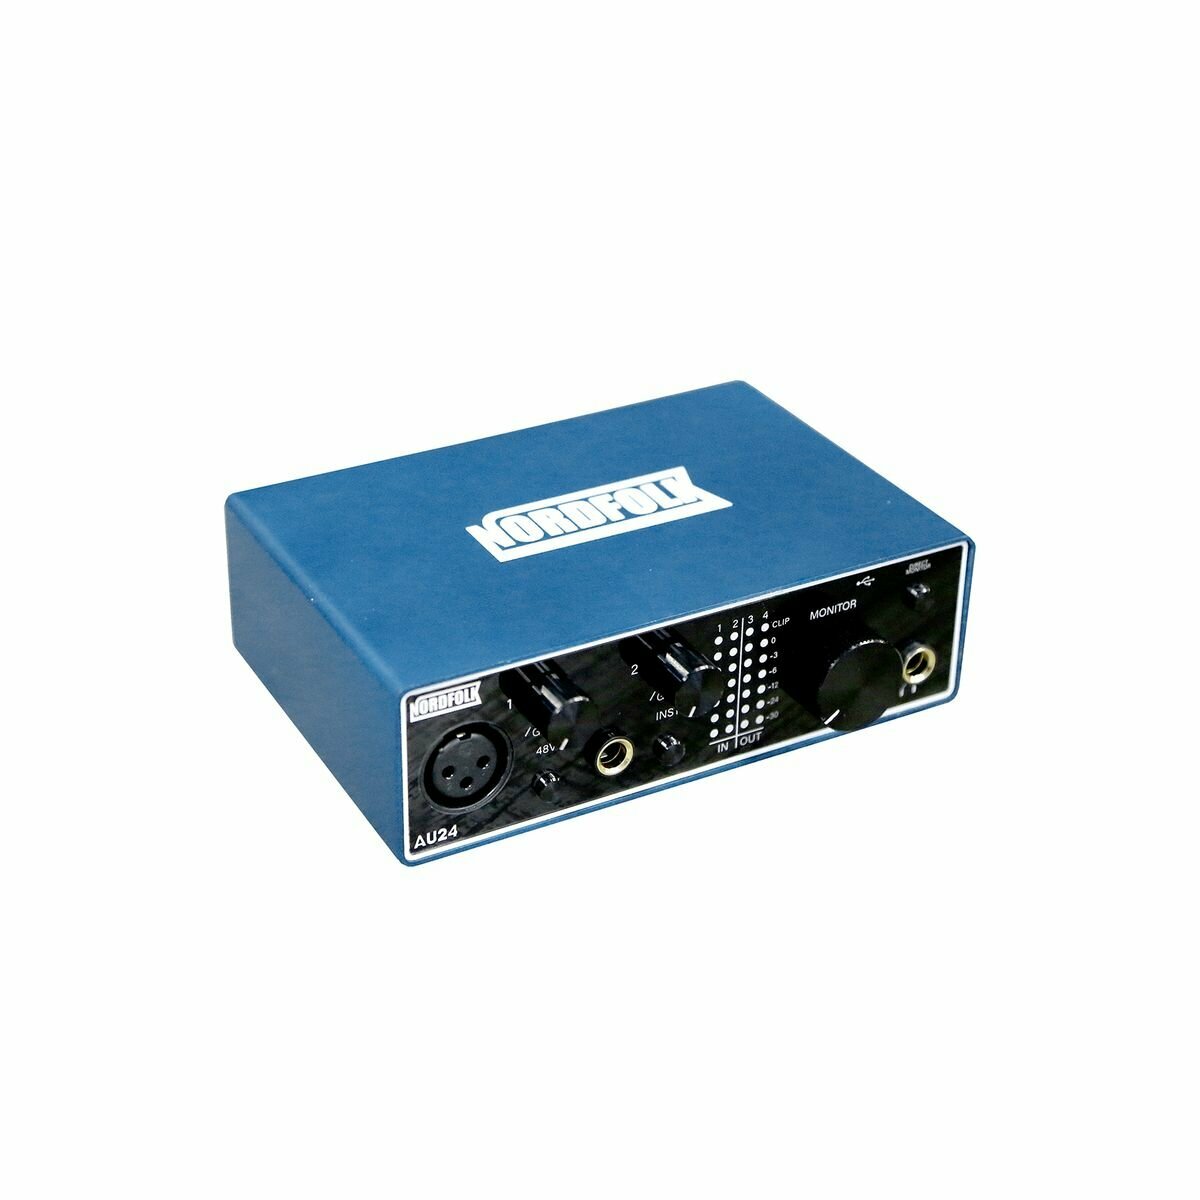 NordFolk AU24 аудиоинтерфейс USB 1 микр 1 лин вход USB Type C 24bit/192kHz